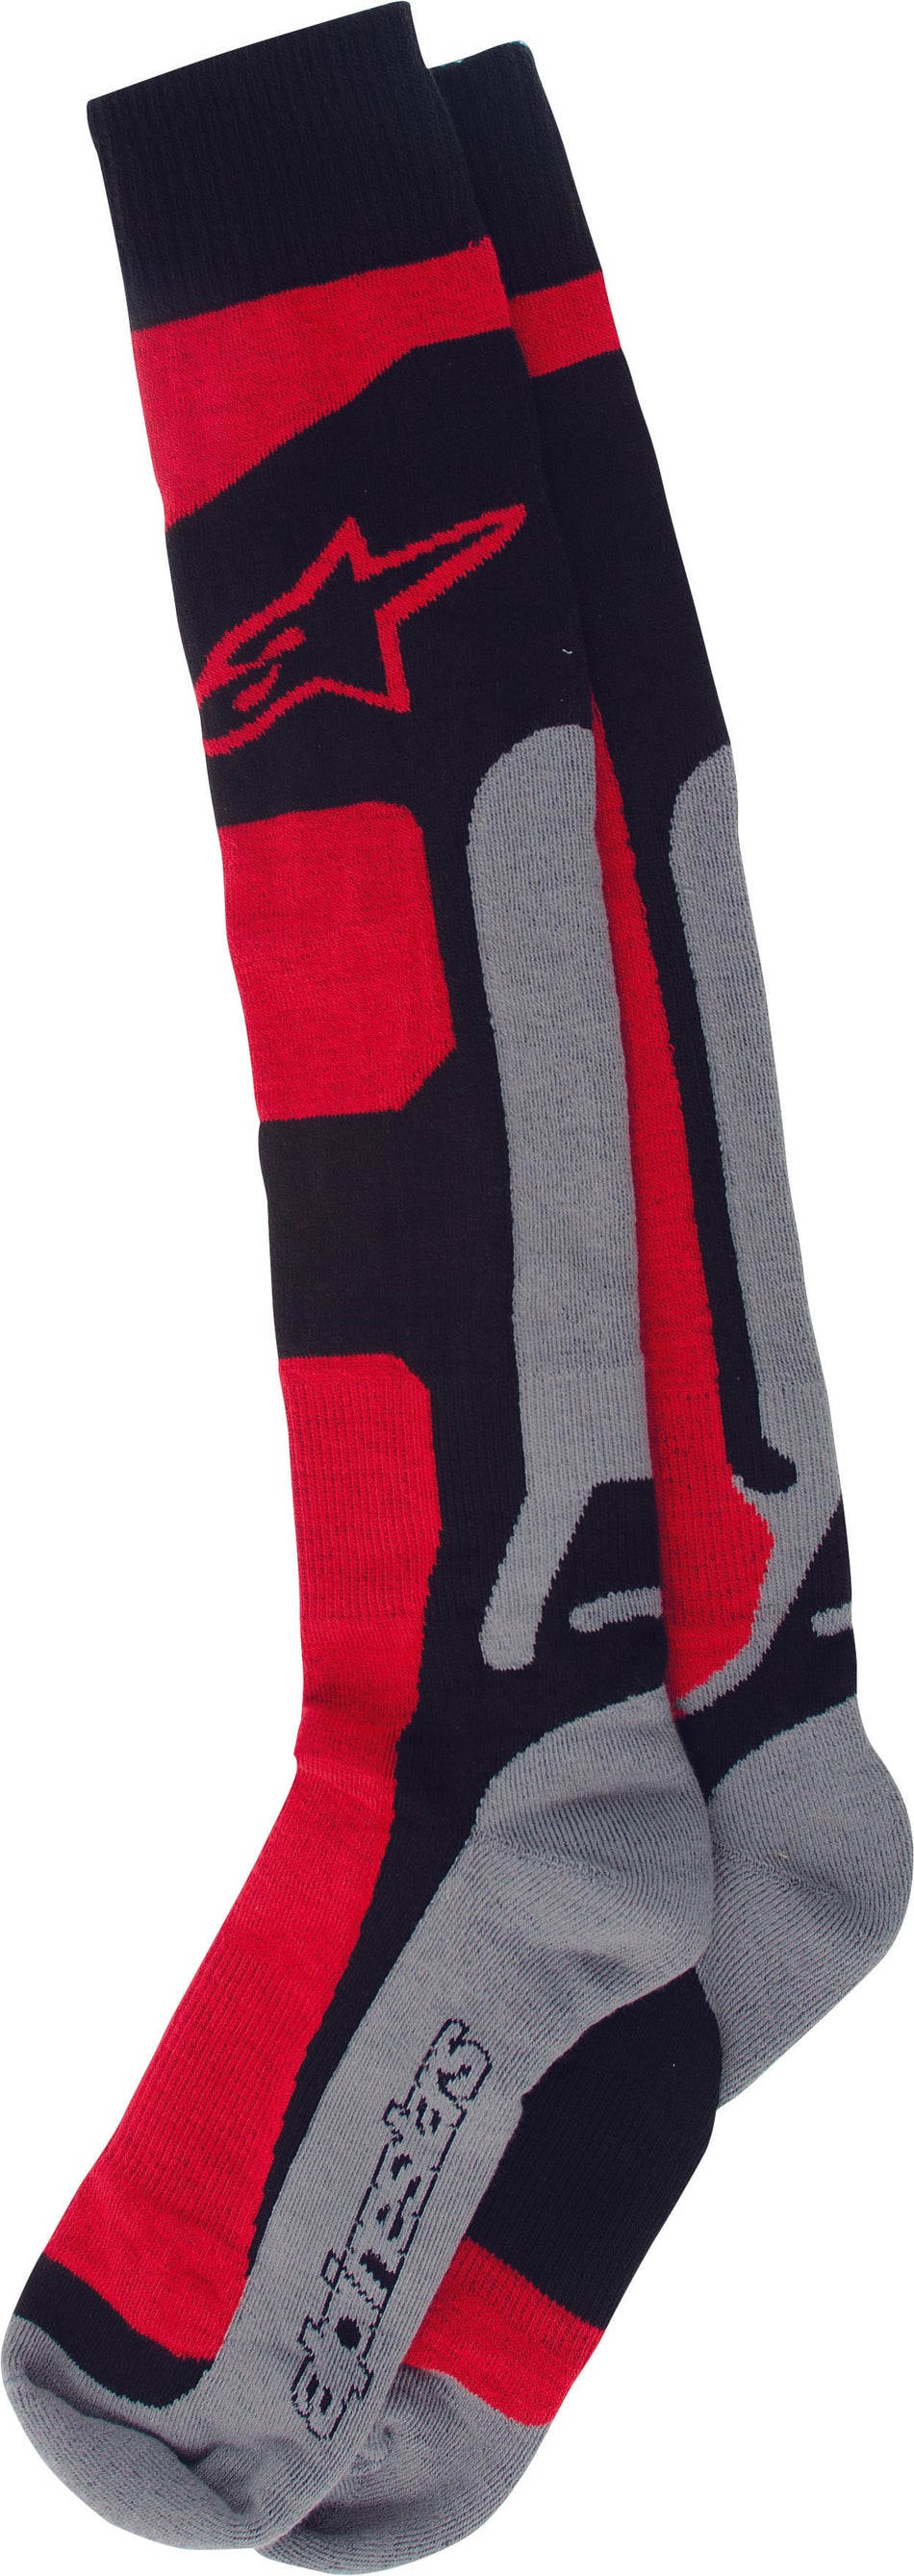 ALPINESTARS Tech Coolmax Socks Red Sm-Md 4702114-311-S/M